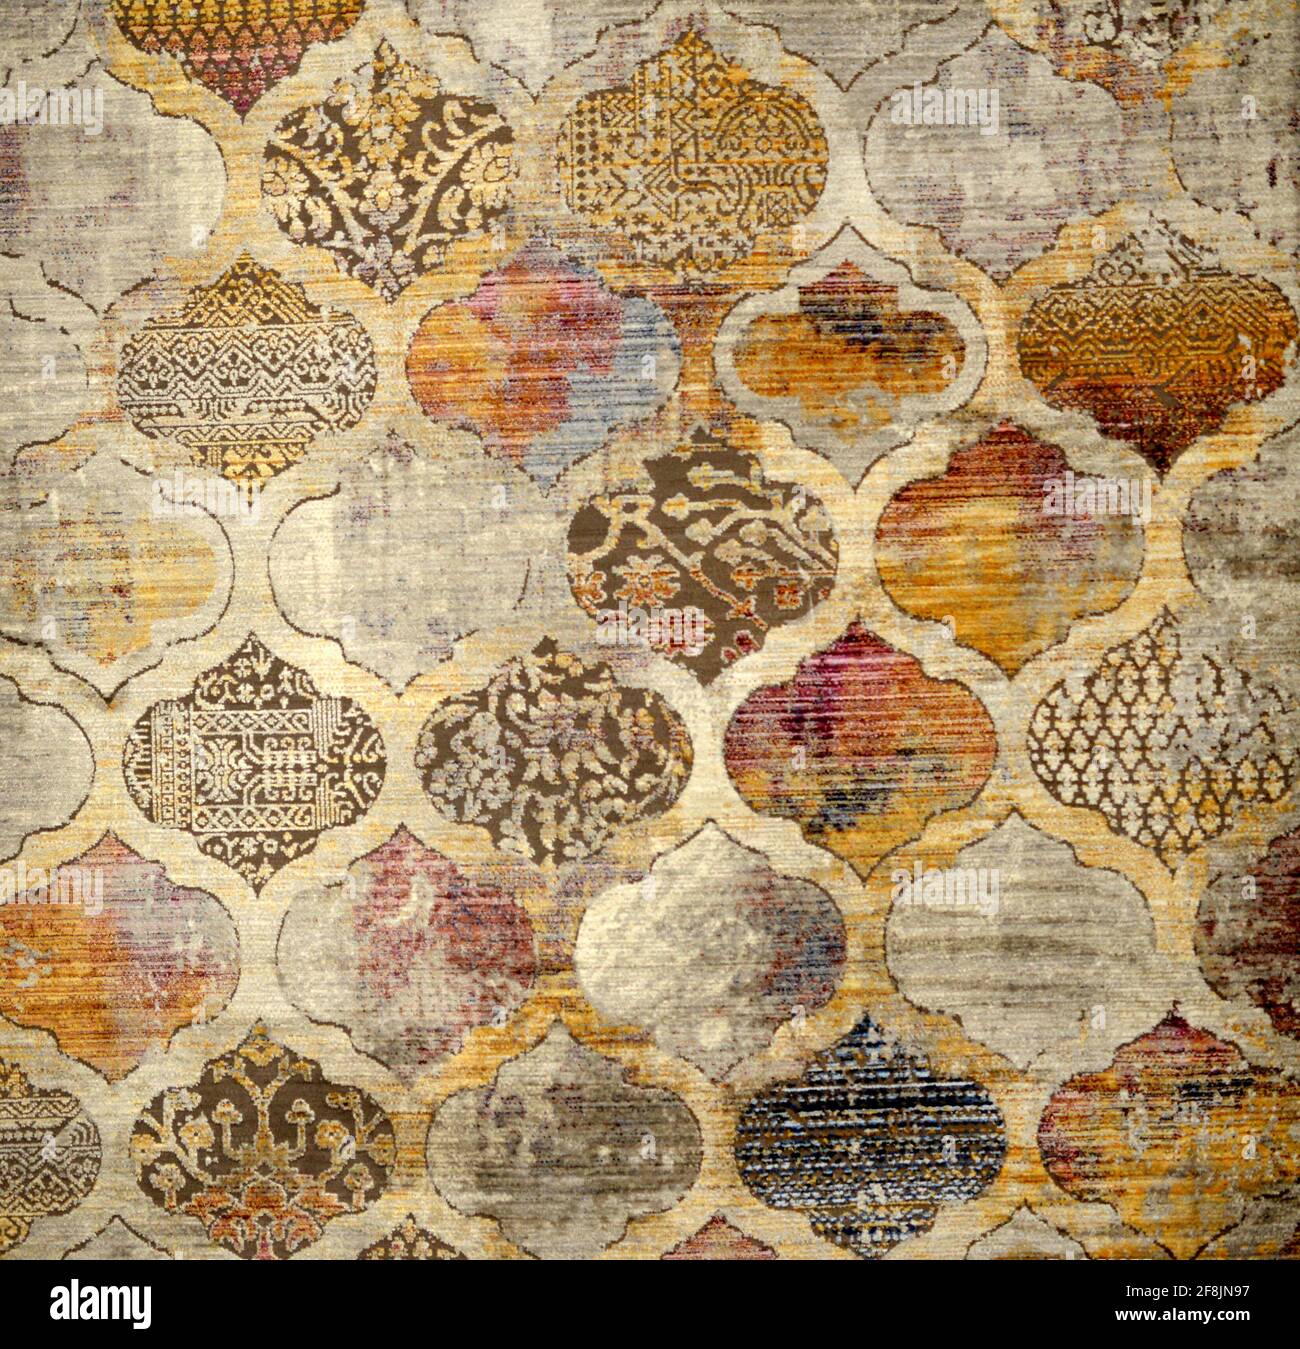 carpet rug patterns texture design image Stock Photo - Alamy